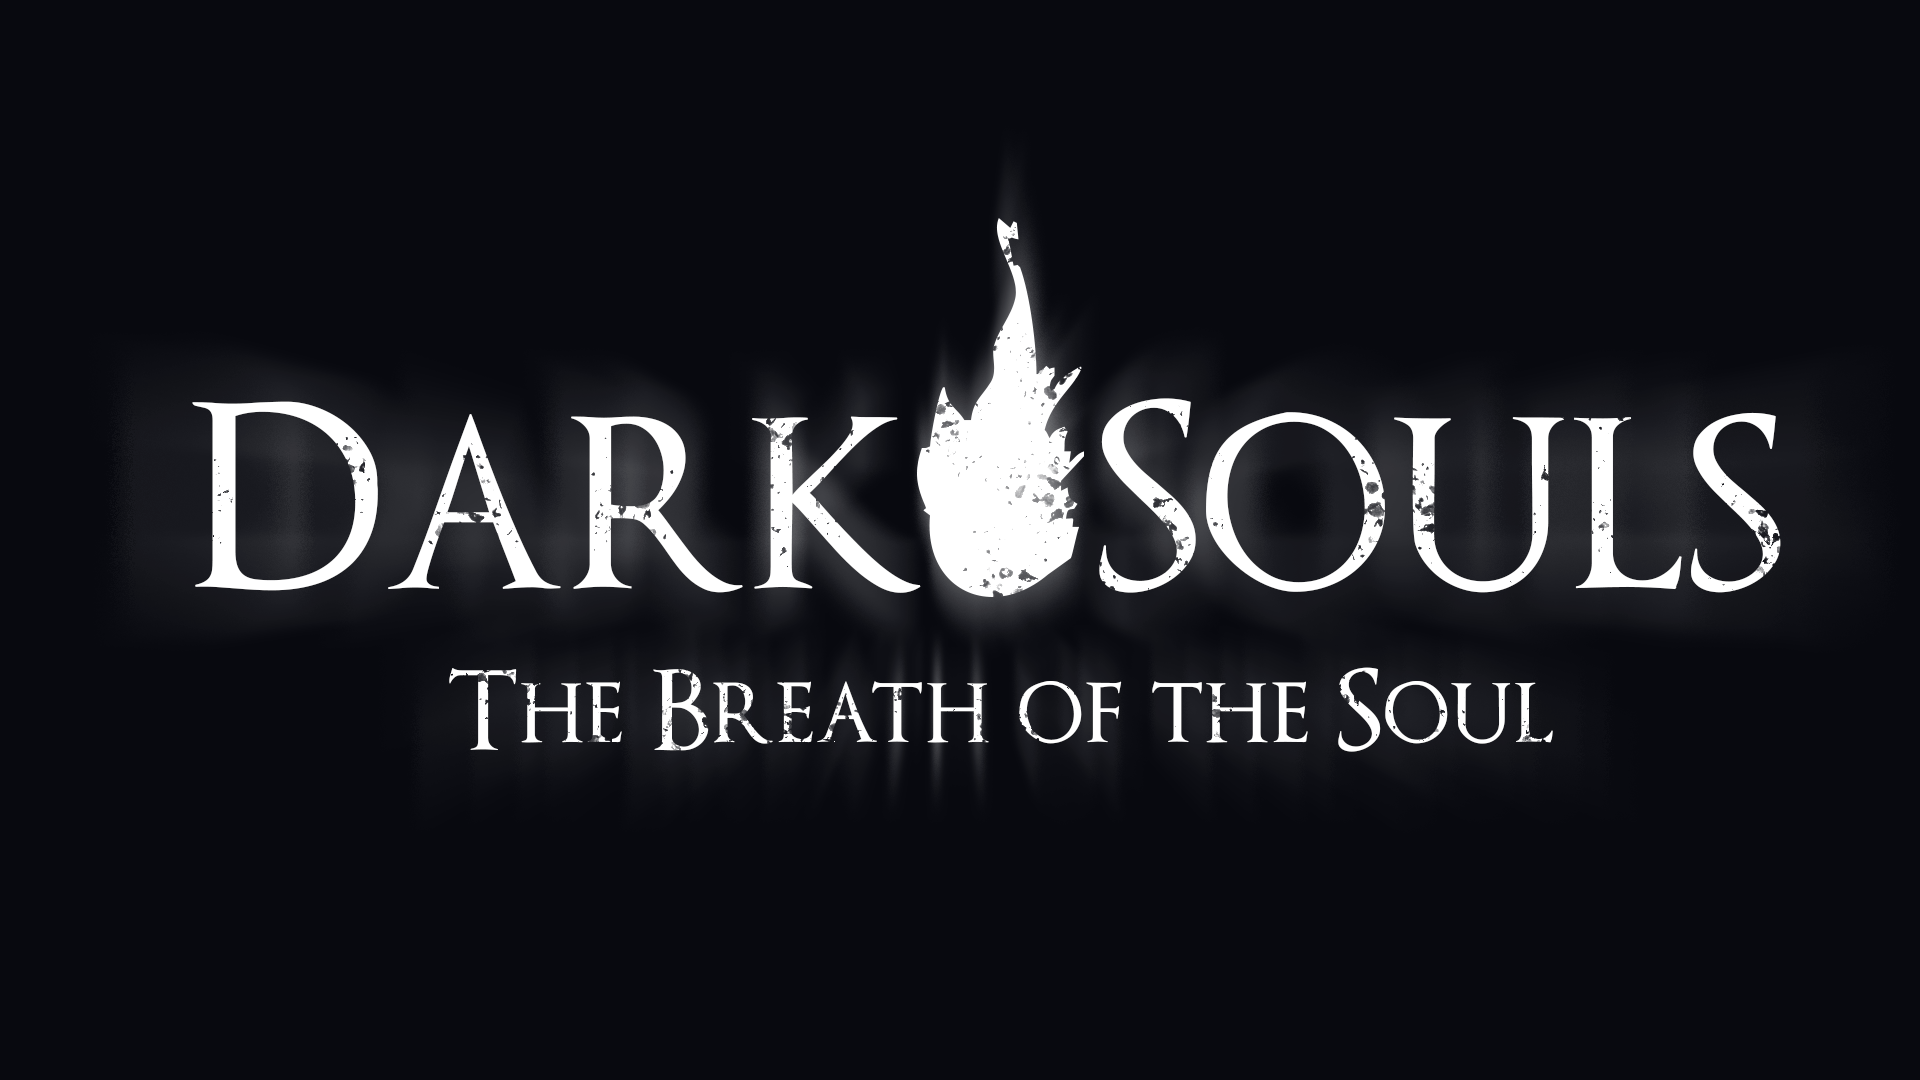 how to mod dark souls sound files